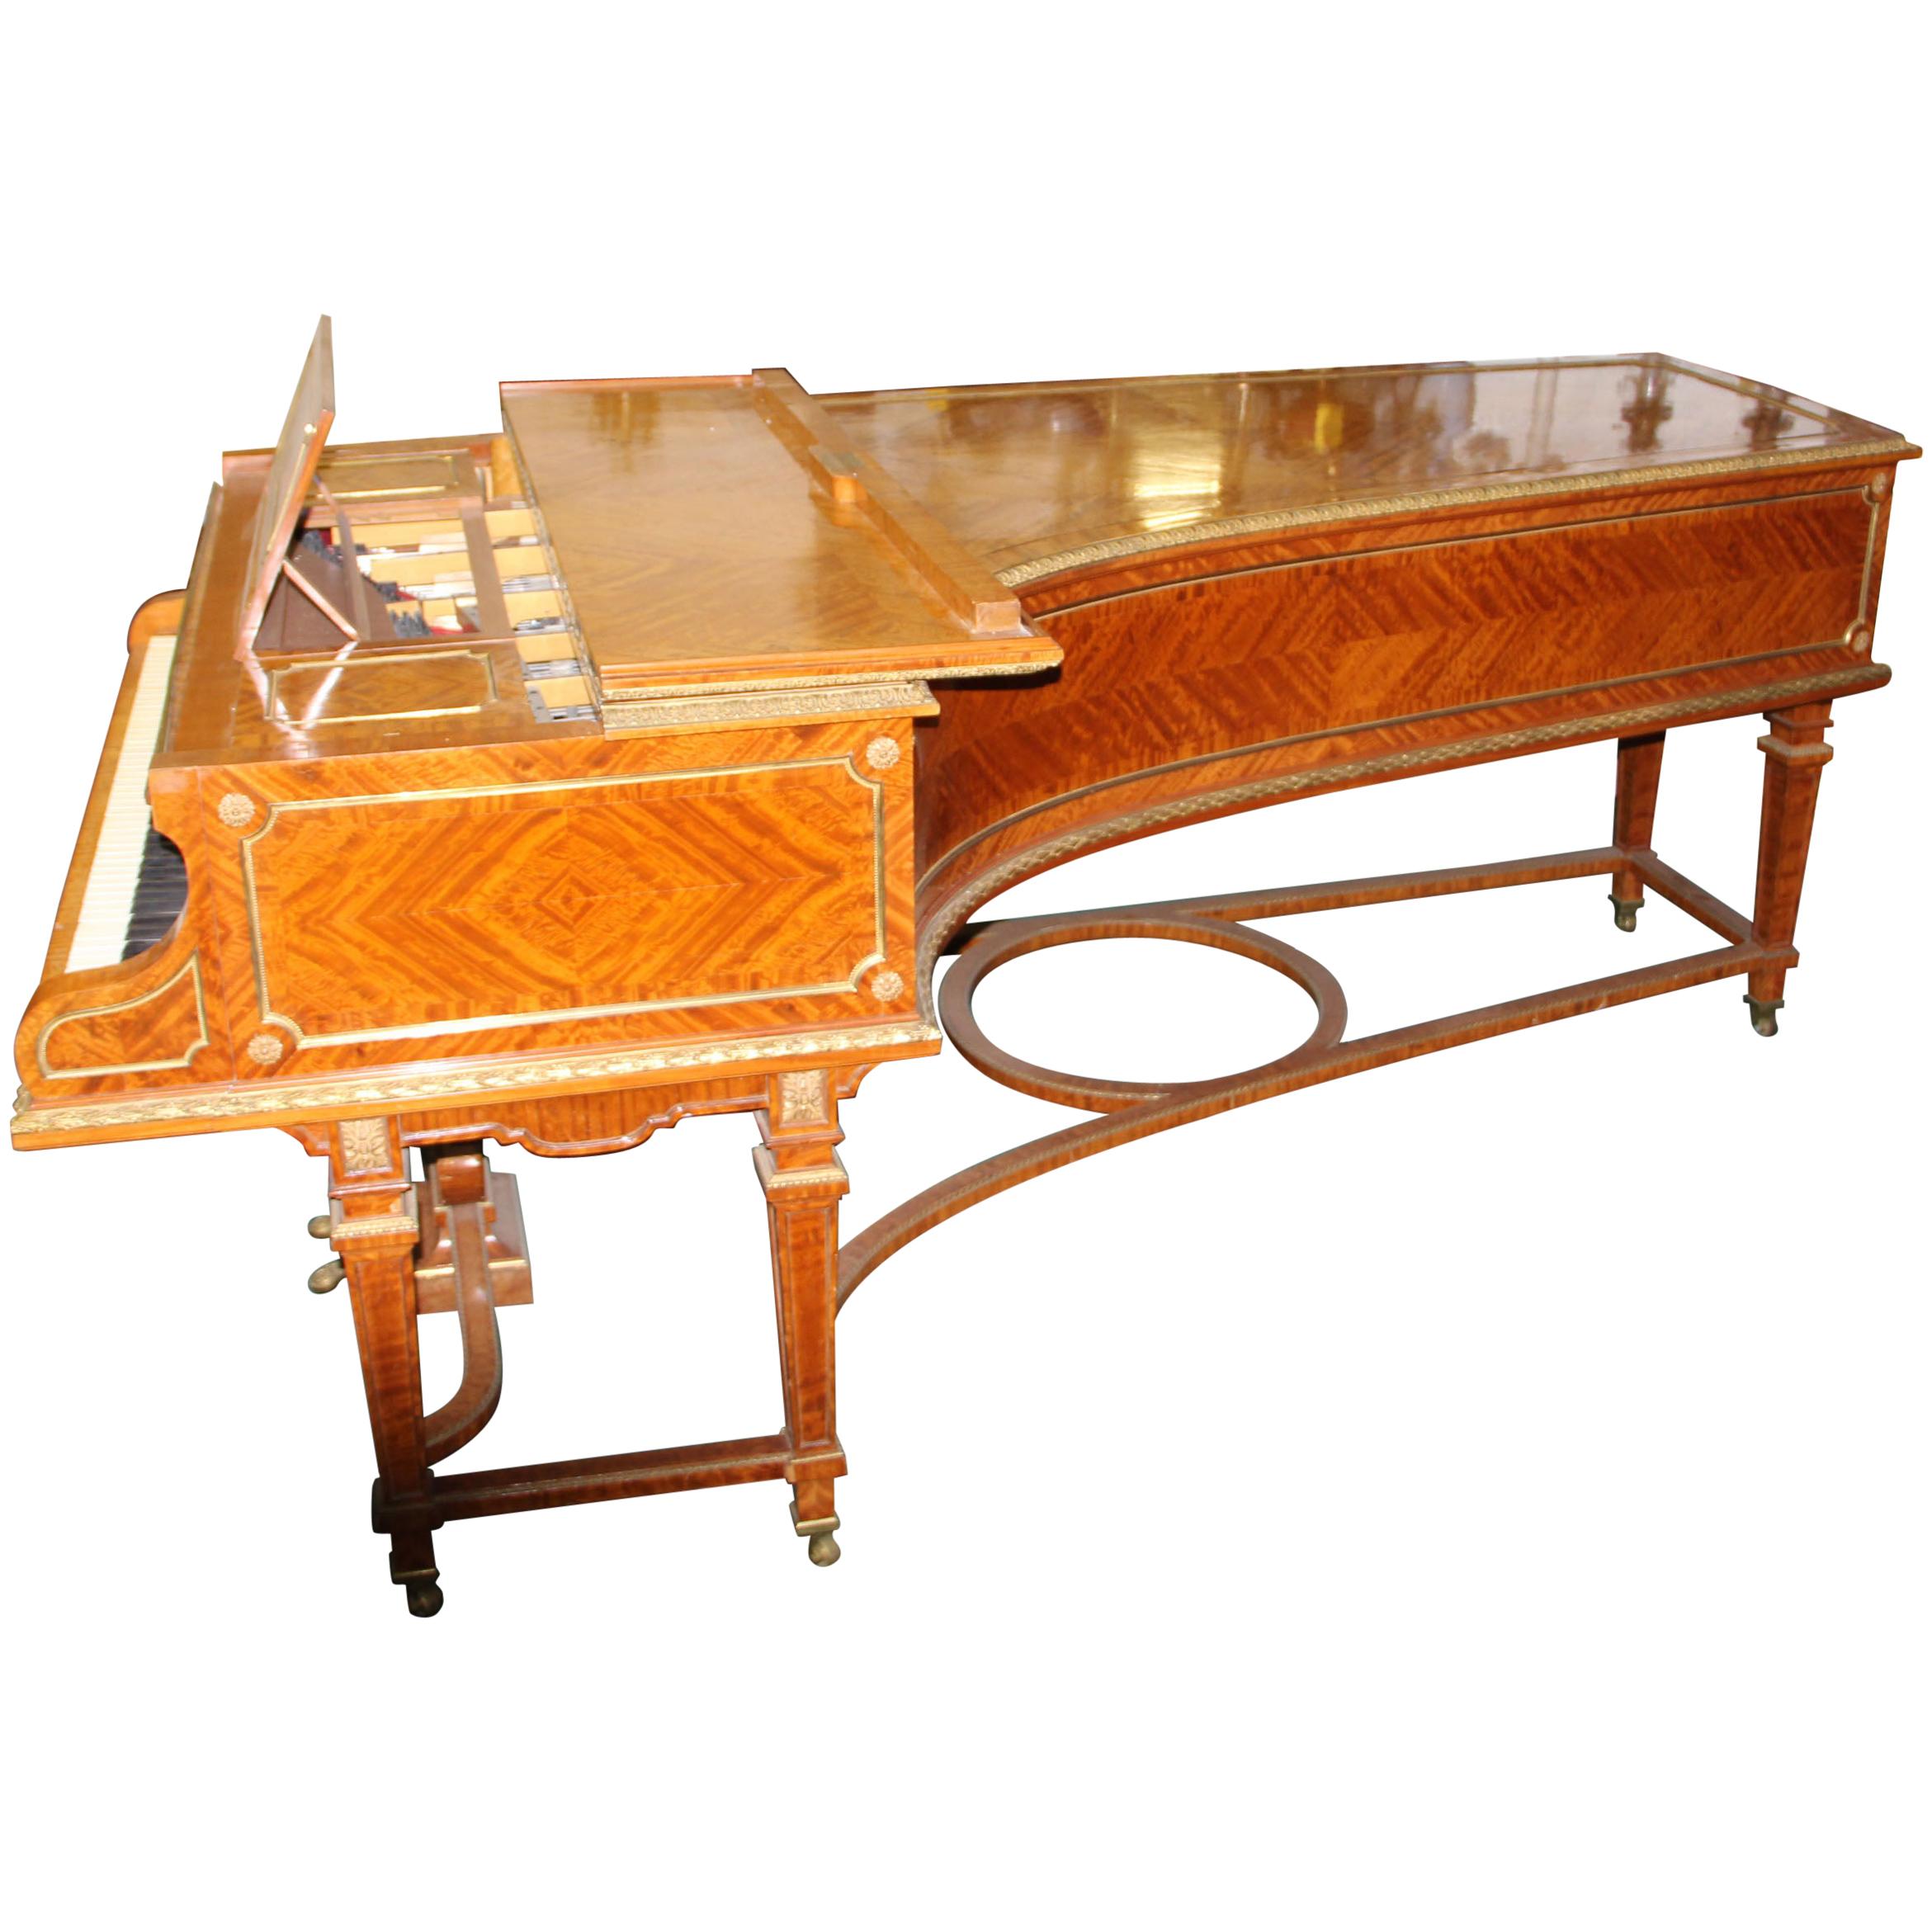 Wonderful Turn of the Century Gilt Bronze Mounted Six-Leg Grand Erard Piano For Sale